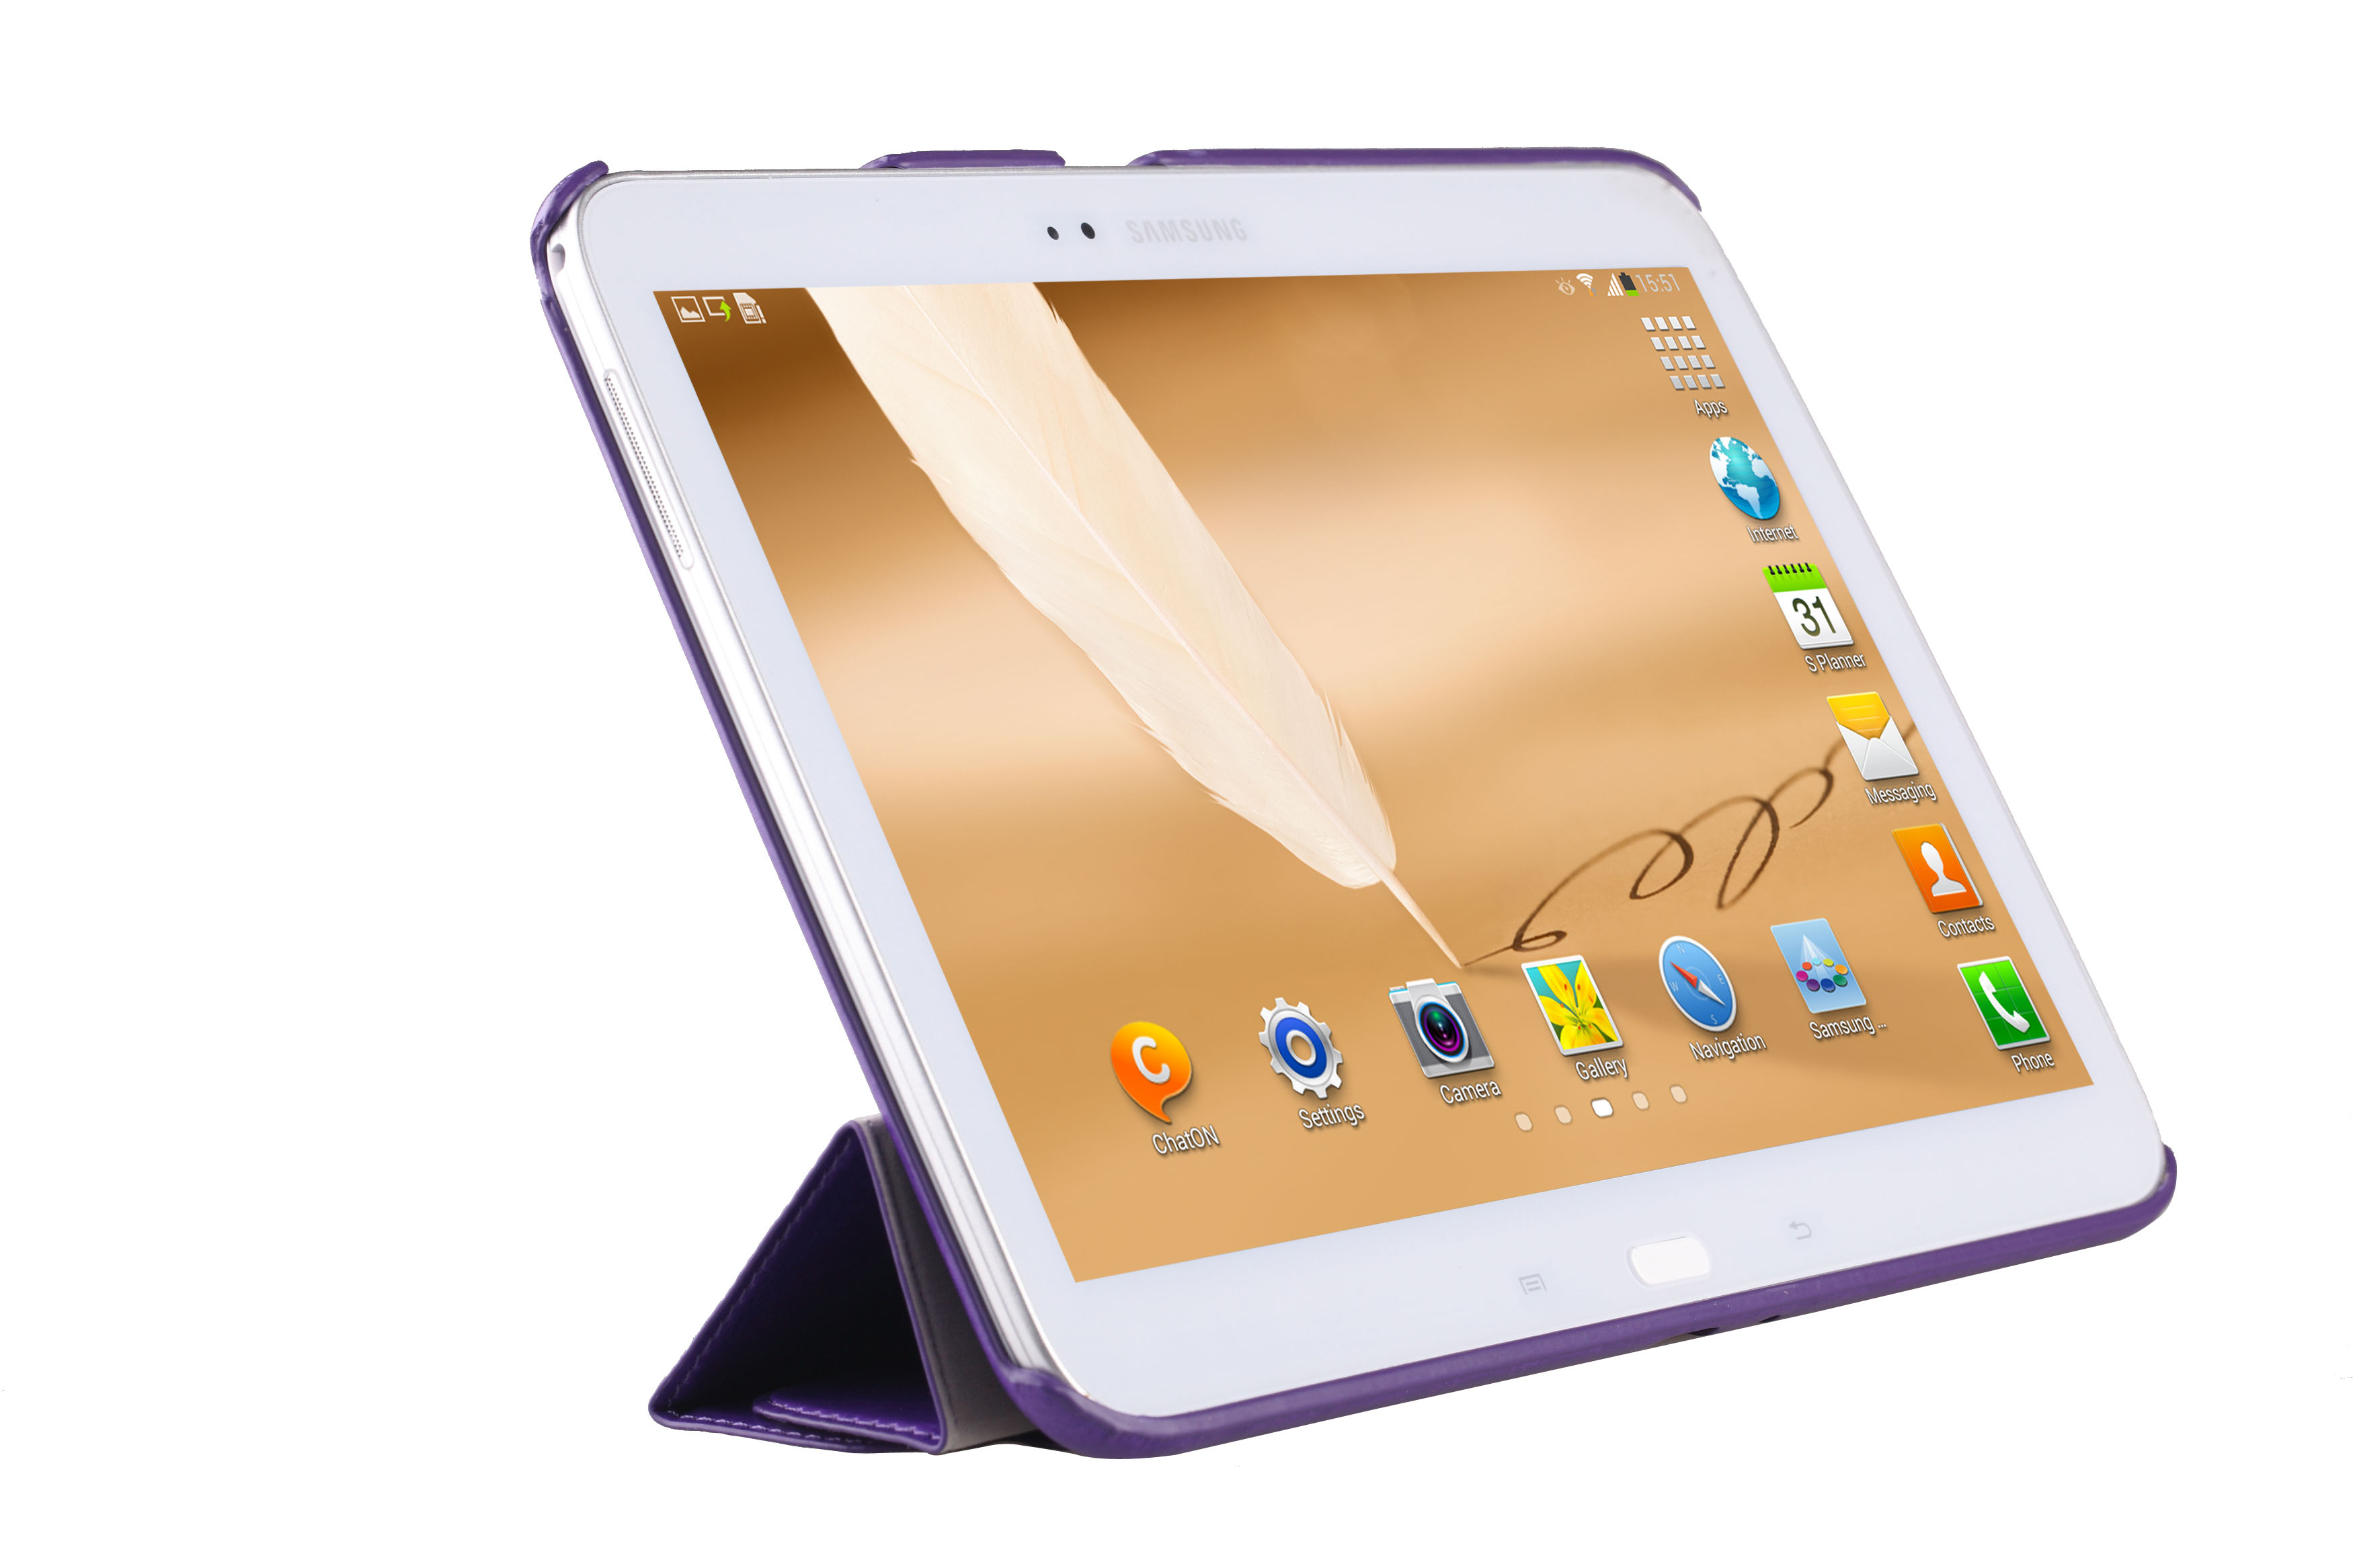 Чехол-книжка G-Case Slim Premium для Samsung Galaxy Tab 3 10.1 Purple